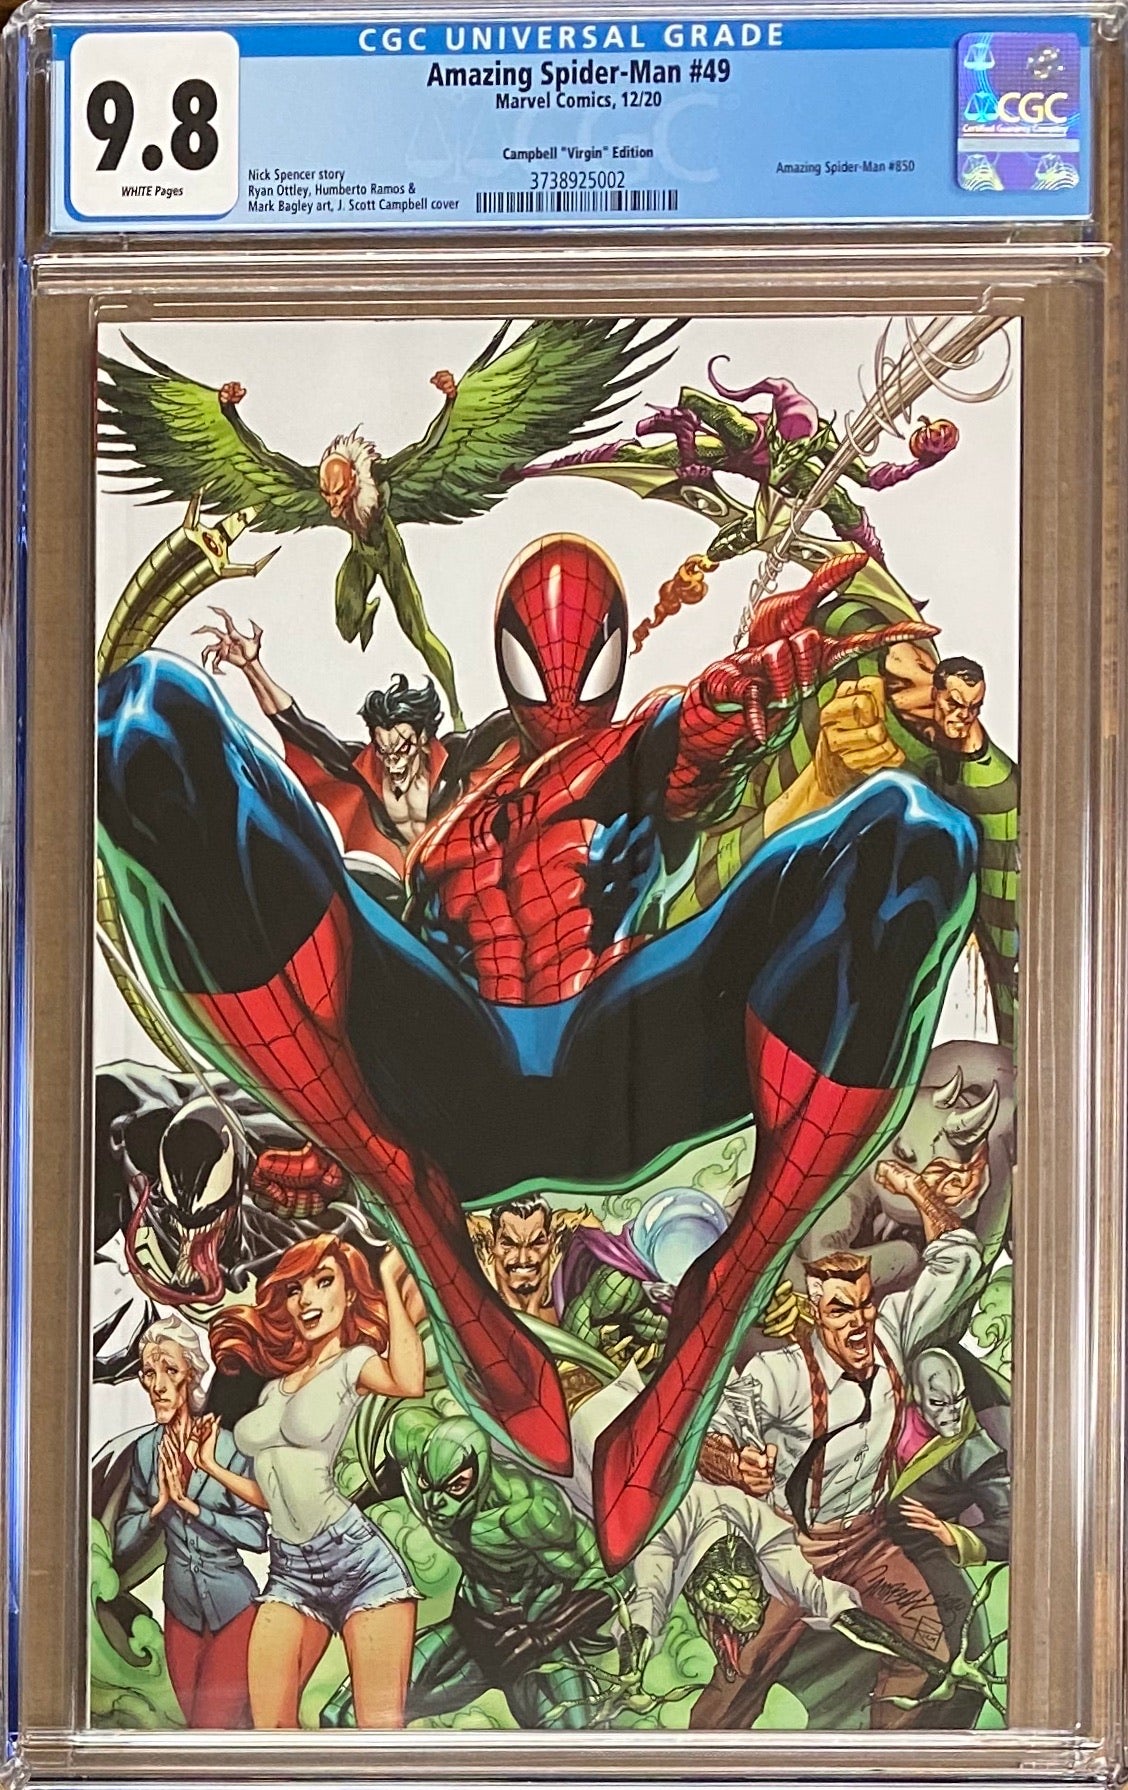 Amazing Spider-Man #850 (#49) Campbell 1:500 Virgin Retailer Incentive Variant CGC 9.8